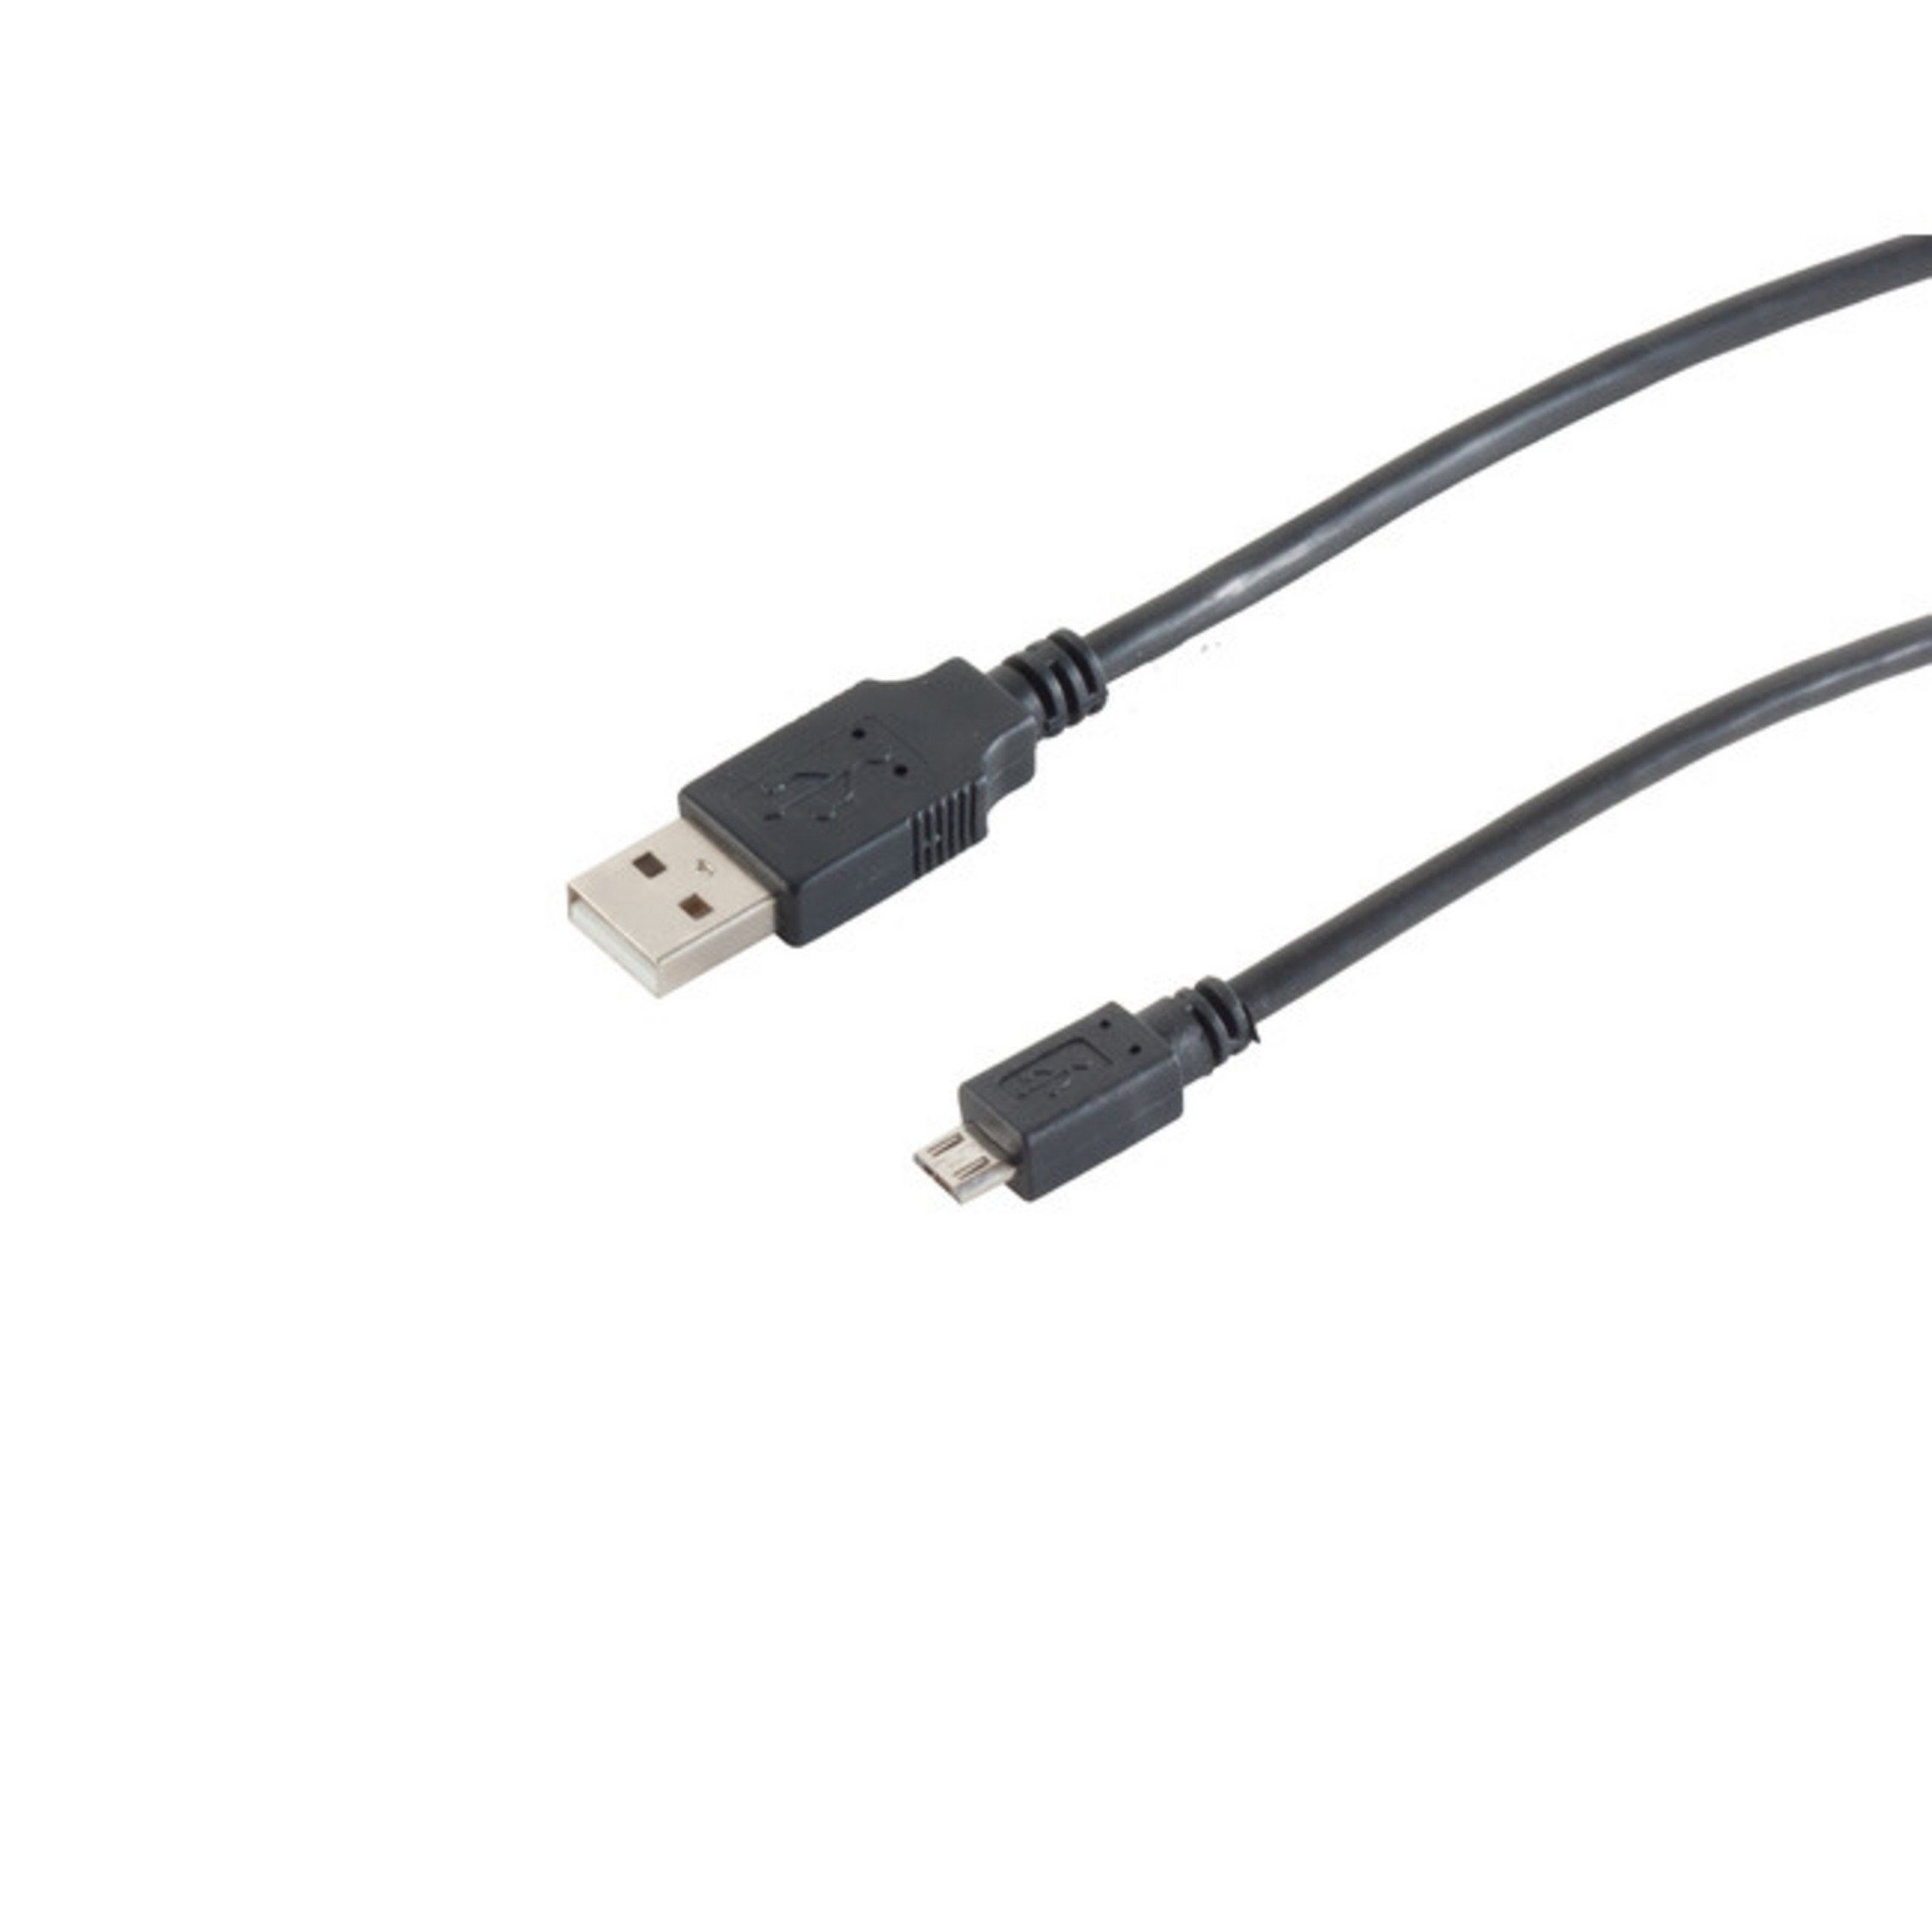 S/CONN MAXIMUM CONNECTIVITY FAST 3 m, Lade-Kabel 2.0 USB Kabel, USB-A-St./USB-B MICRO 3m, Schwarz St